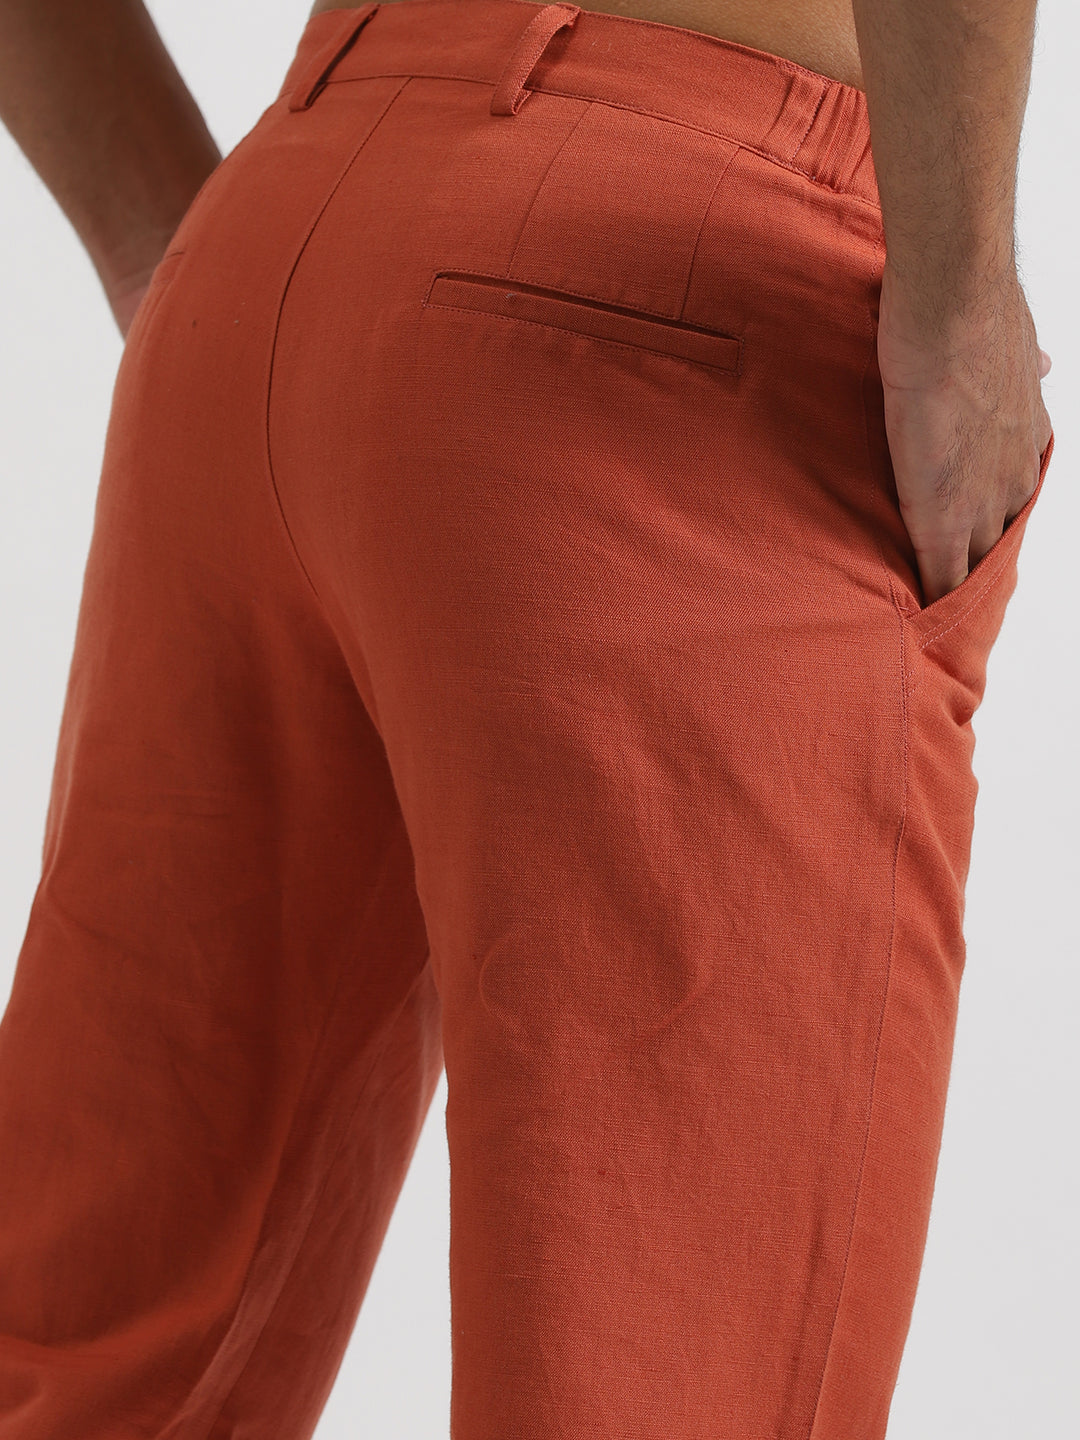 Theo - Linen Travel Pants - Rust